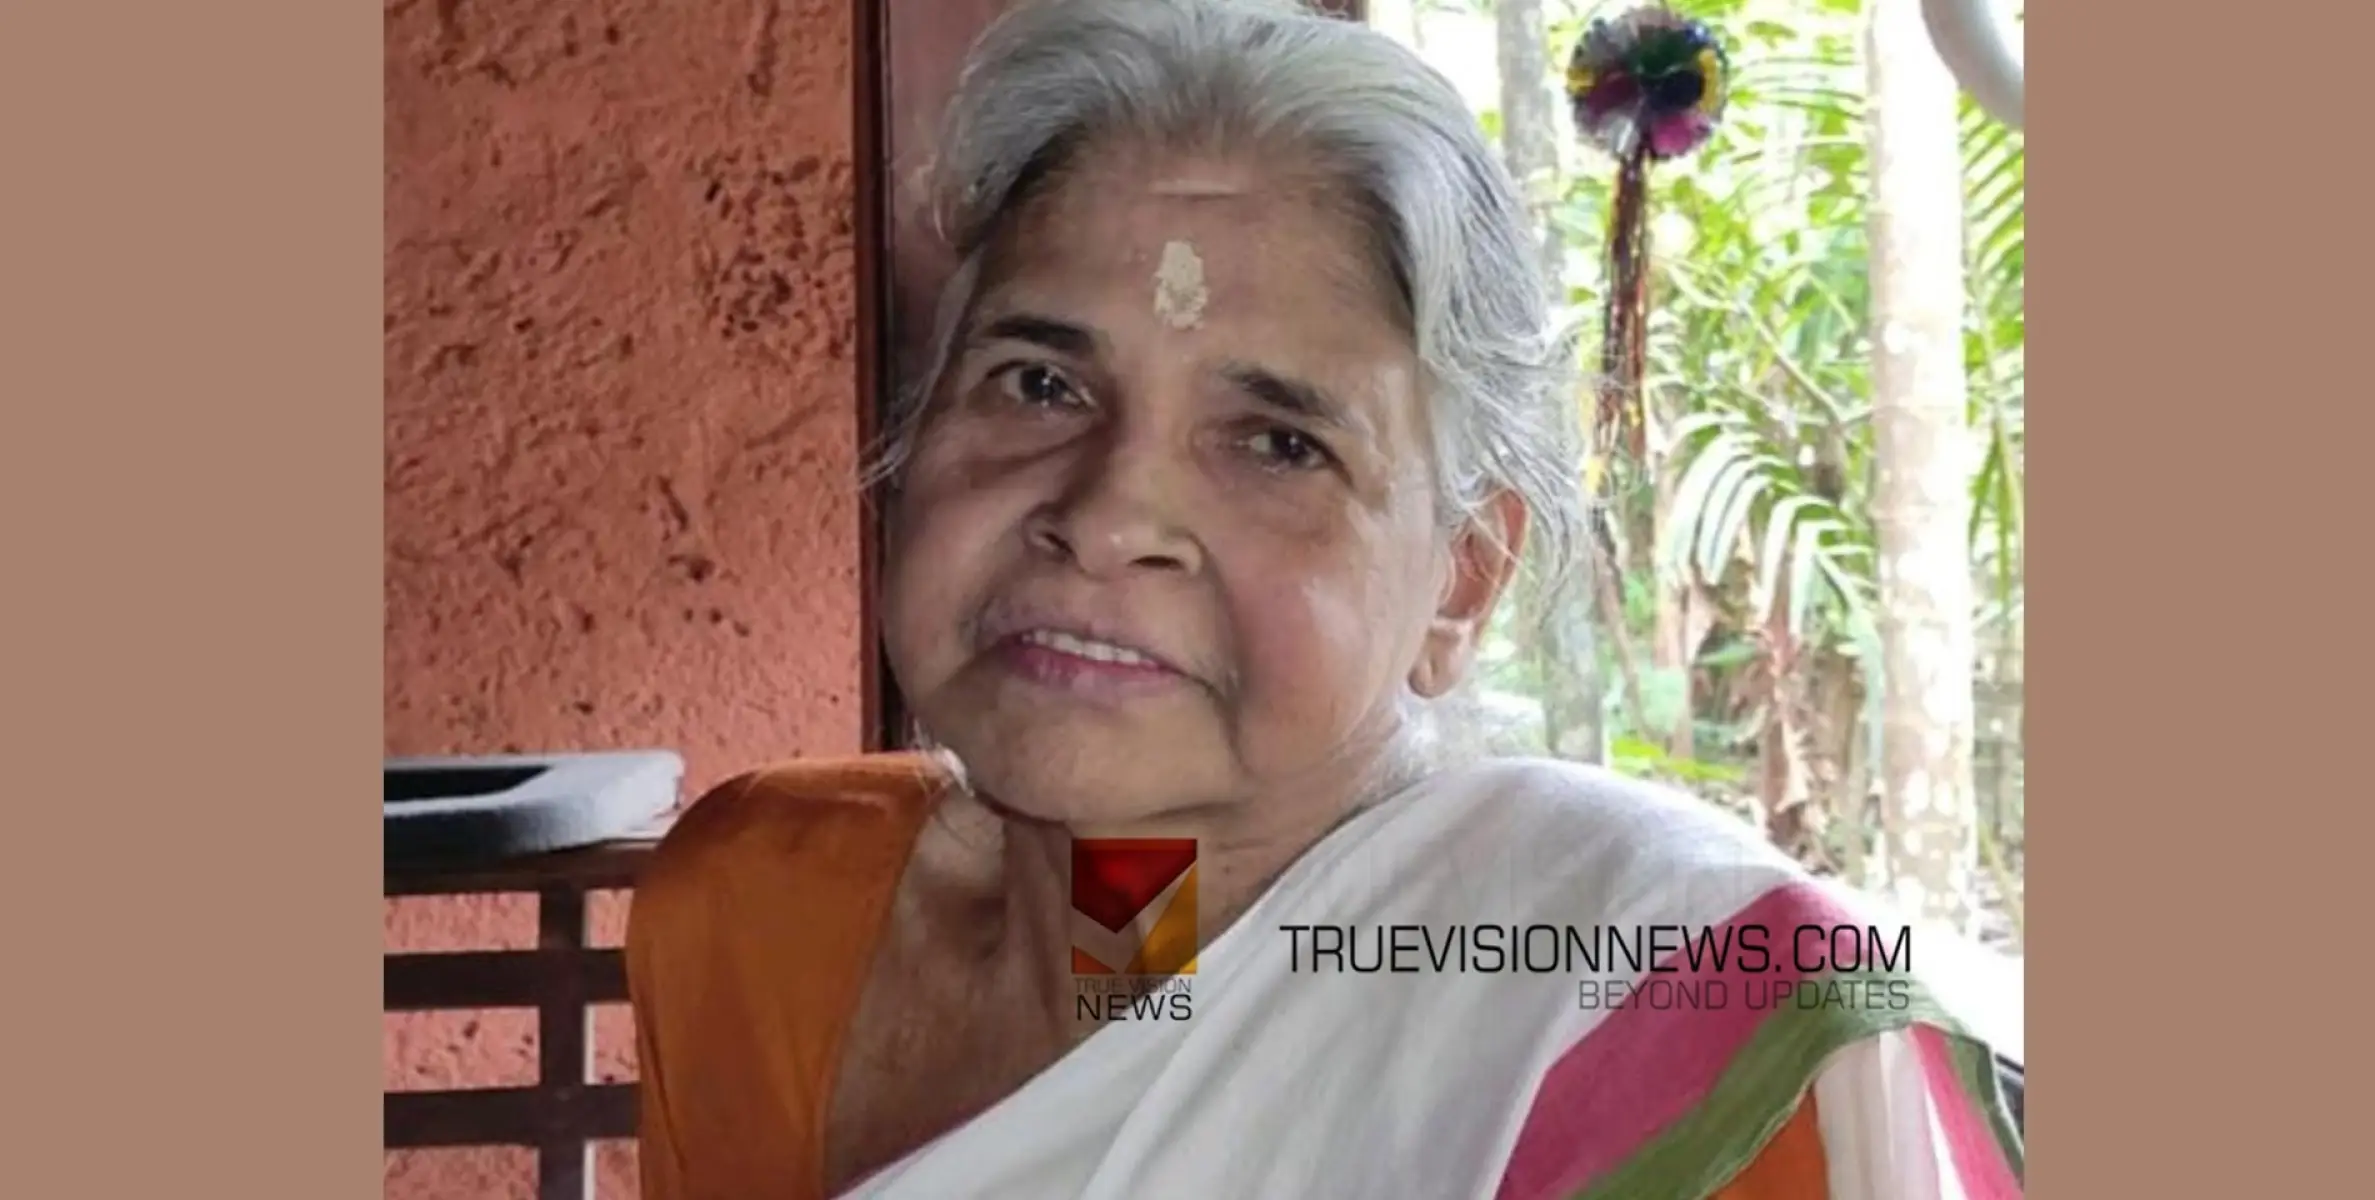 #obituary | നാരായണി കുട്ടി അന്തർജനം അന്തരിച്ചു 